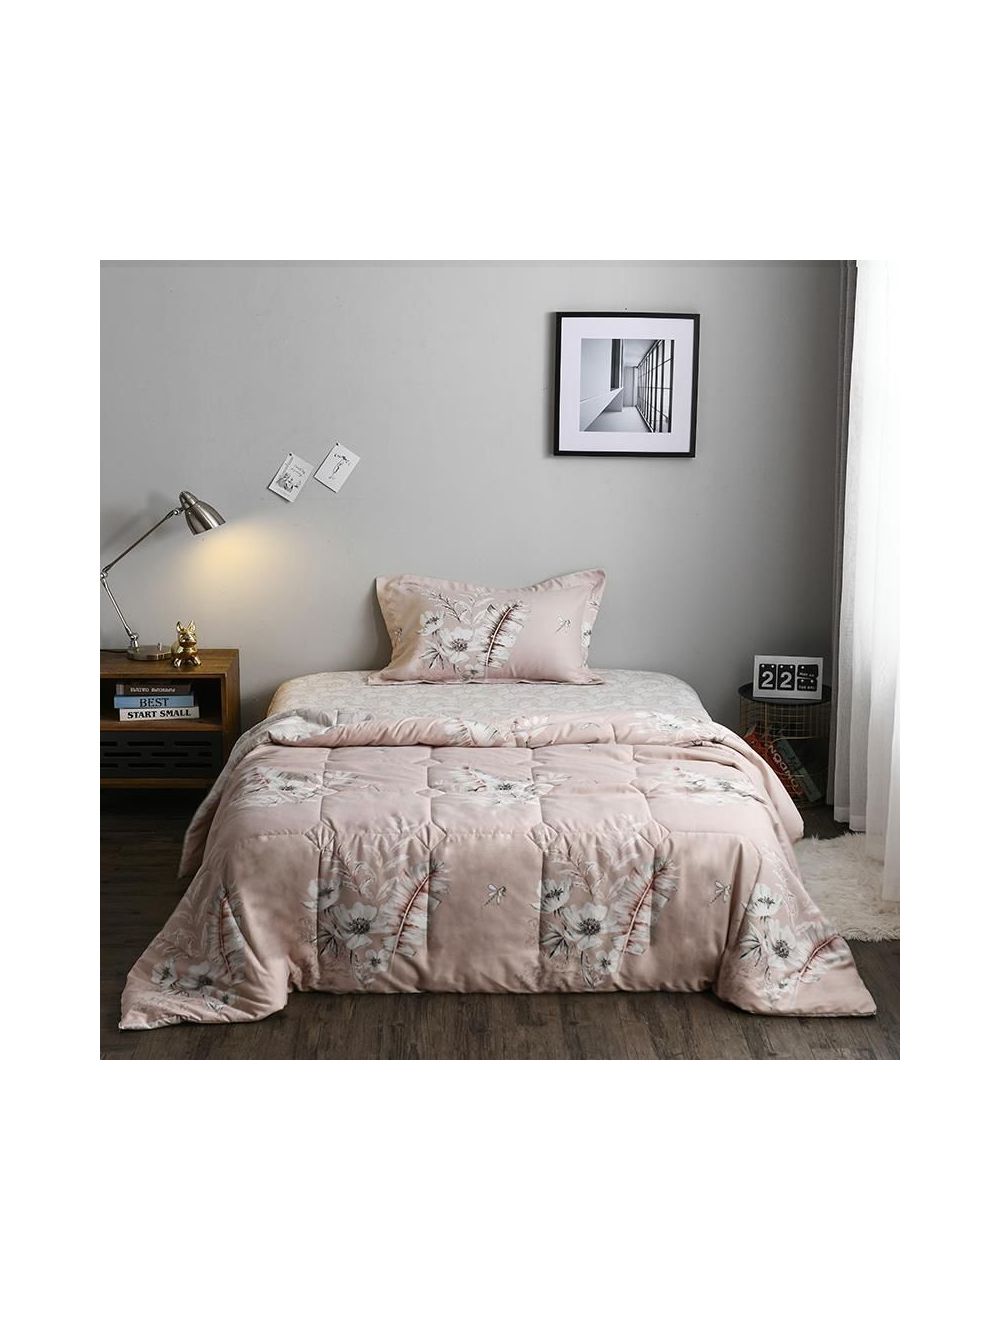 Rishahome 3 Piece Comforter Set (1 comforter+1 fitted sheet+1 Large pillow case) Microfibre Damask Crème Single-DCSMH/03/36